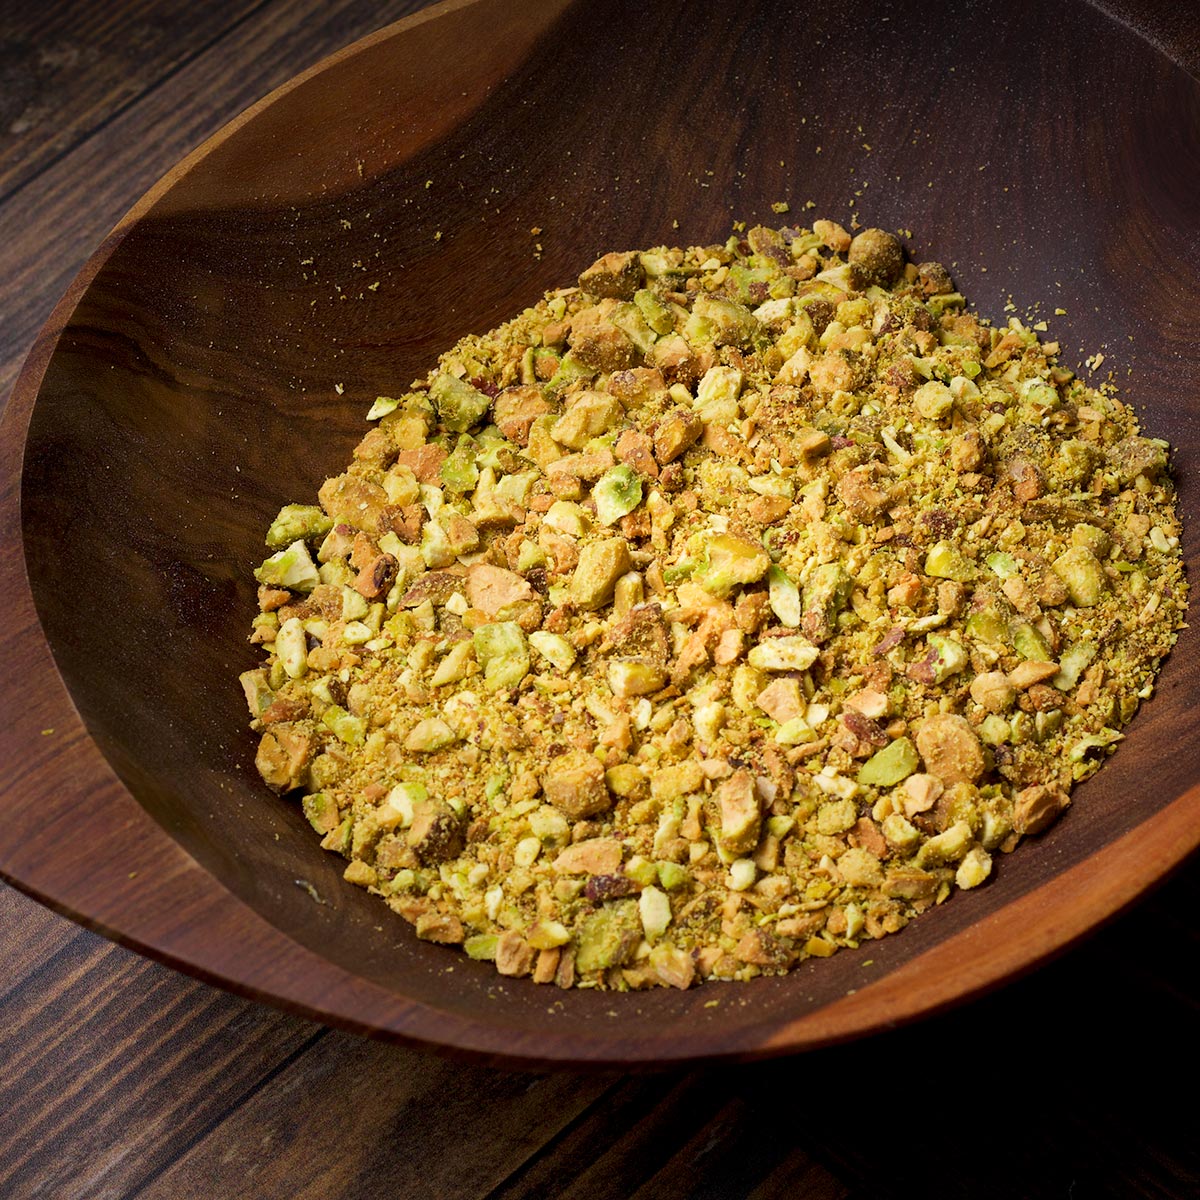 A bowl containing chopped pistachios.